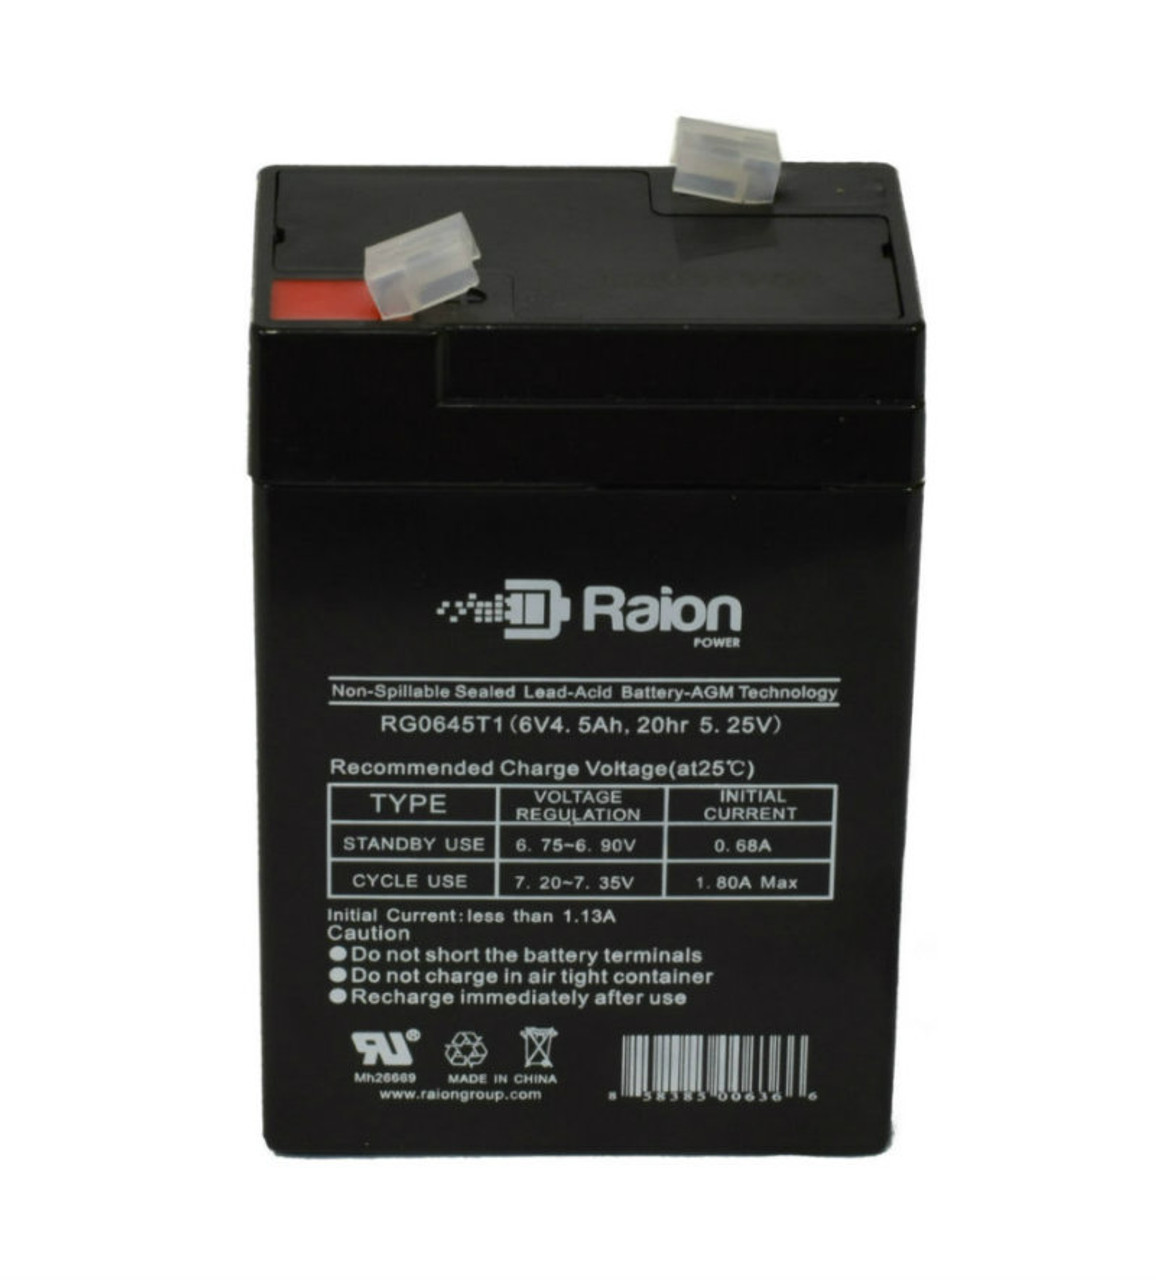 Raion Power RG0645T1 Replacement Battery Cartridge for Emergi-Lite 12E3QS